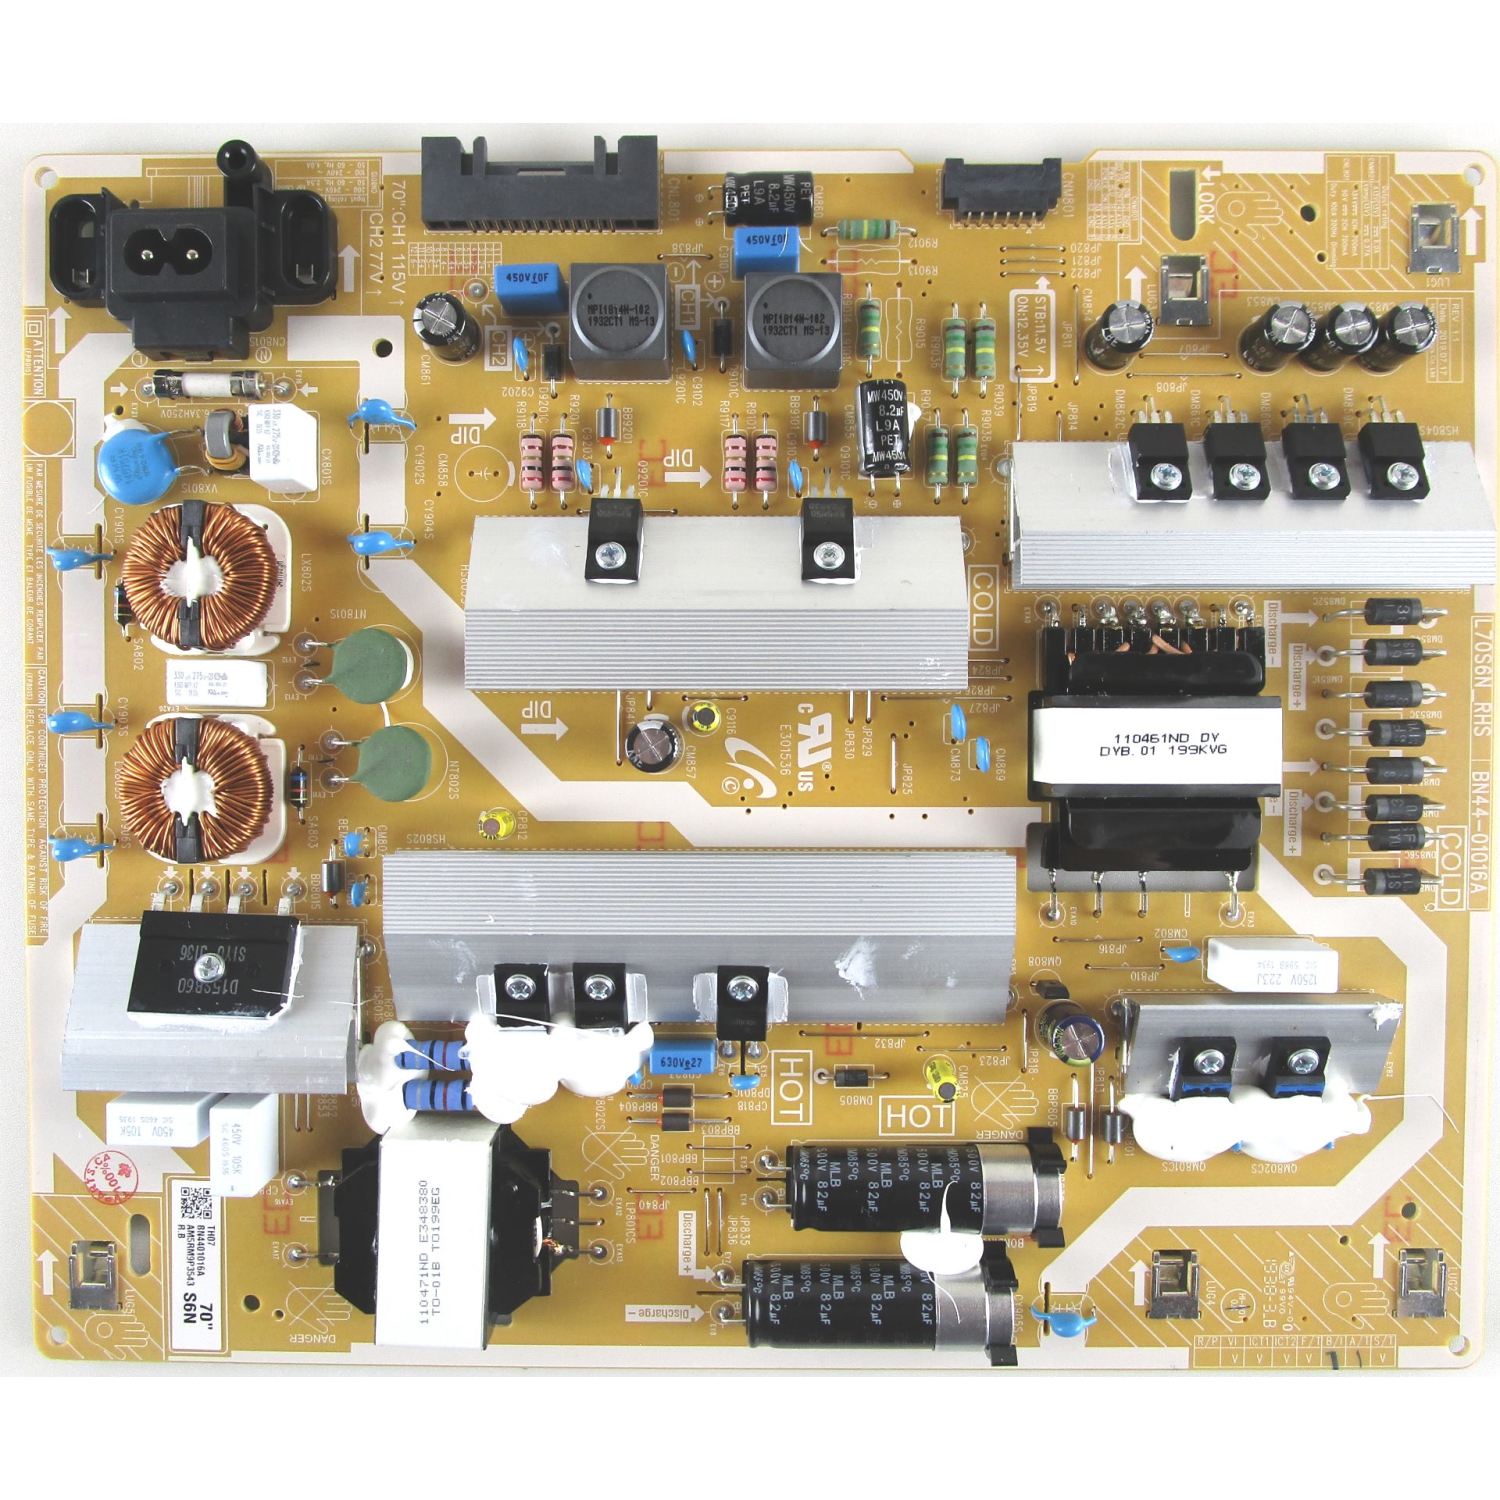 Refurbished (Good) Samsung TV Power Supply Board UN70NU6070 (Ver. YA02/GA01) BN44-01016A